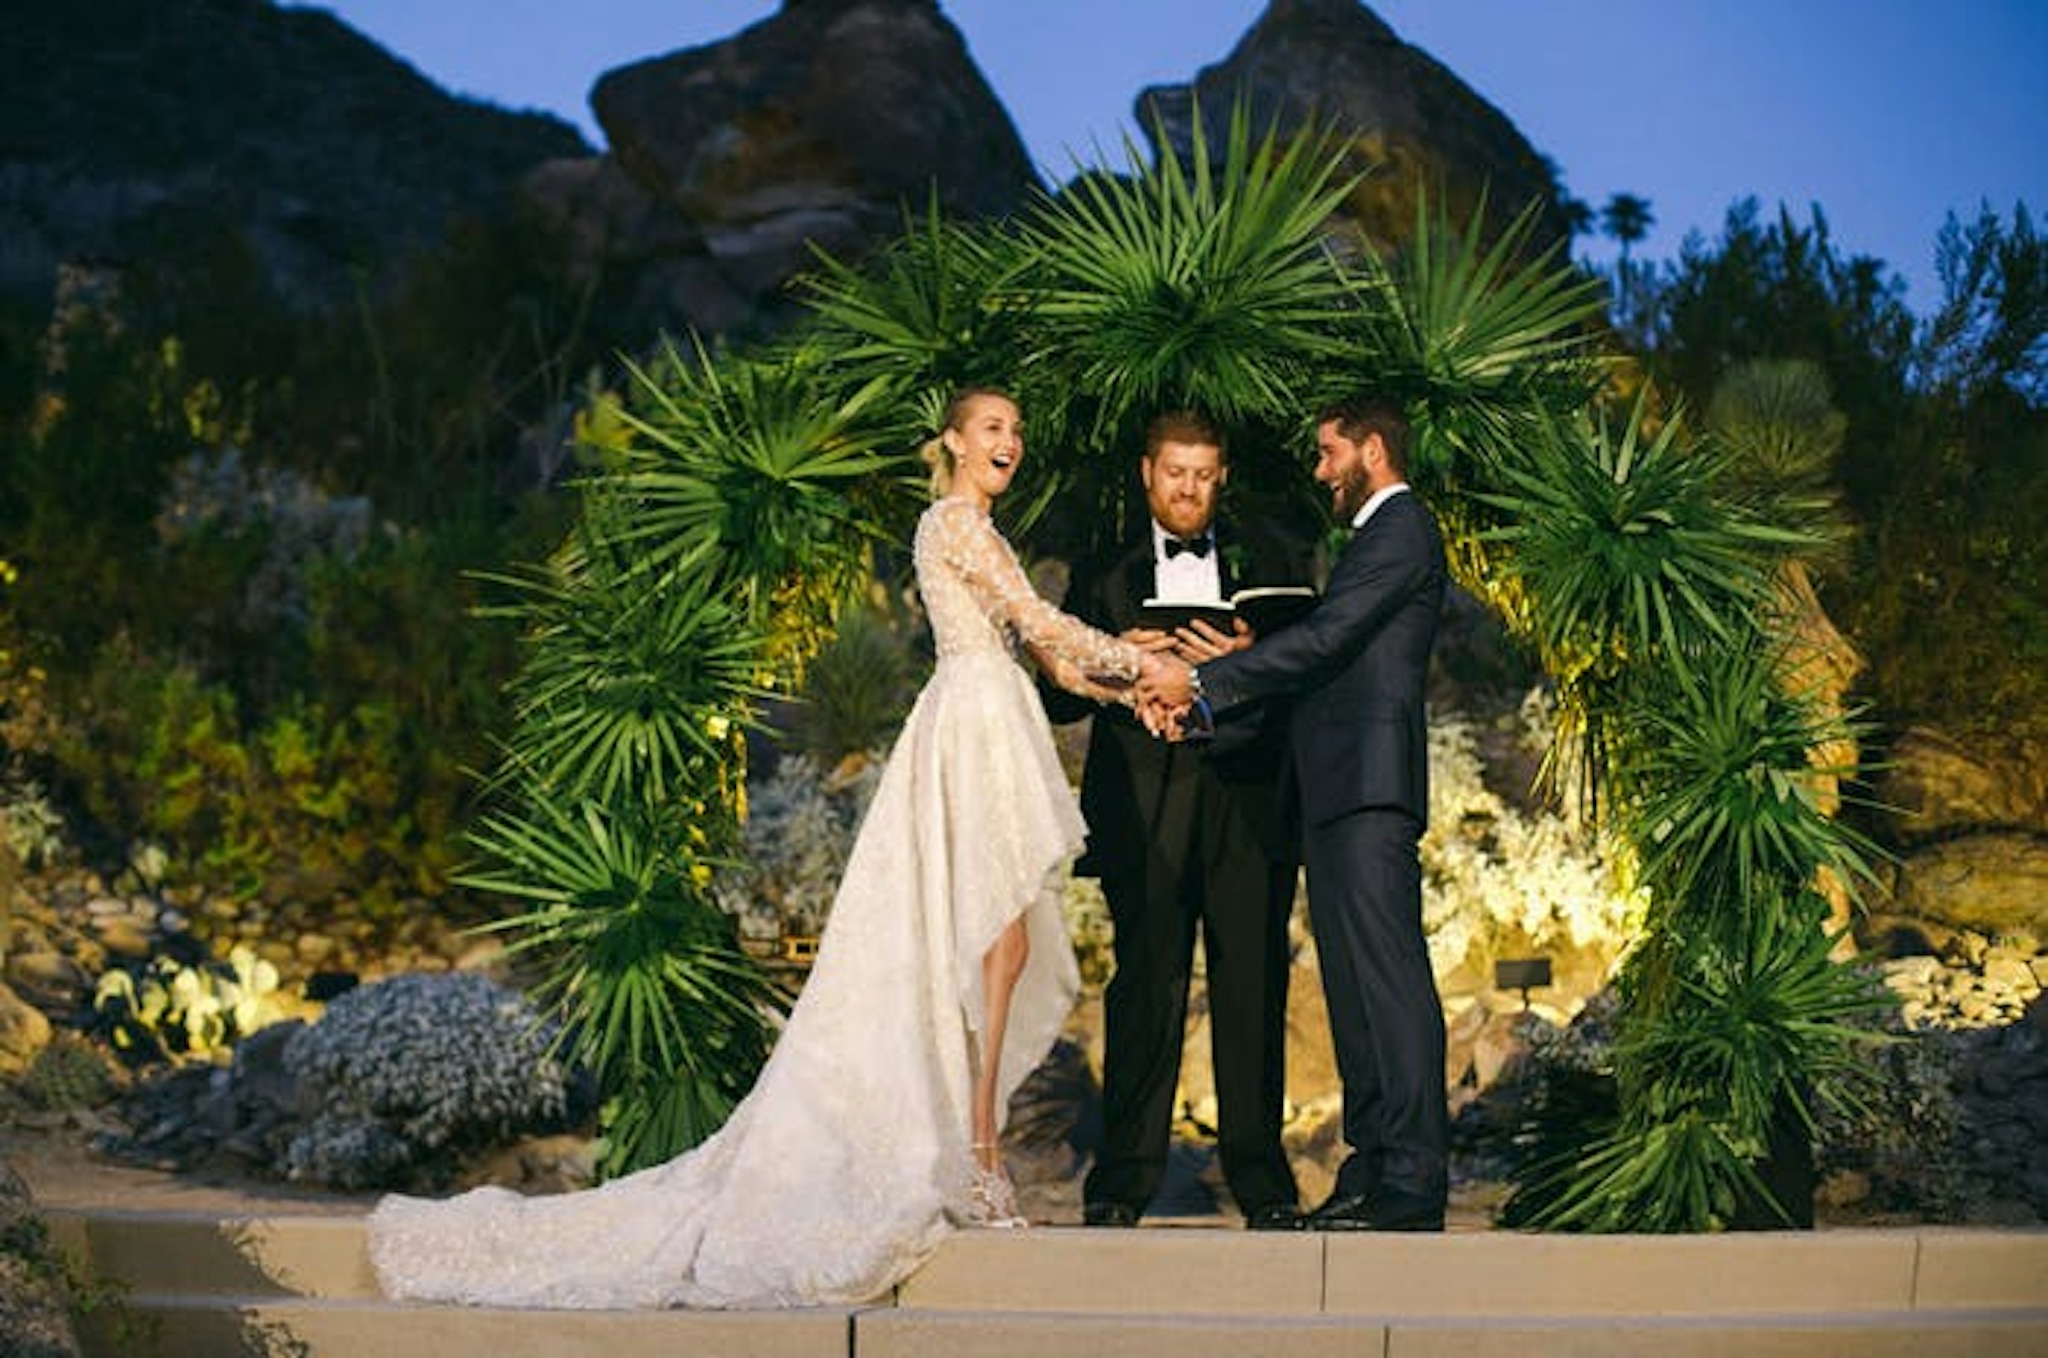 Circular wedding arch with bride and groom